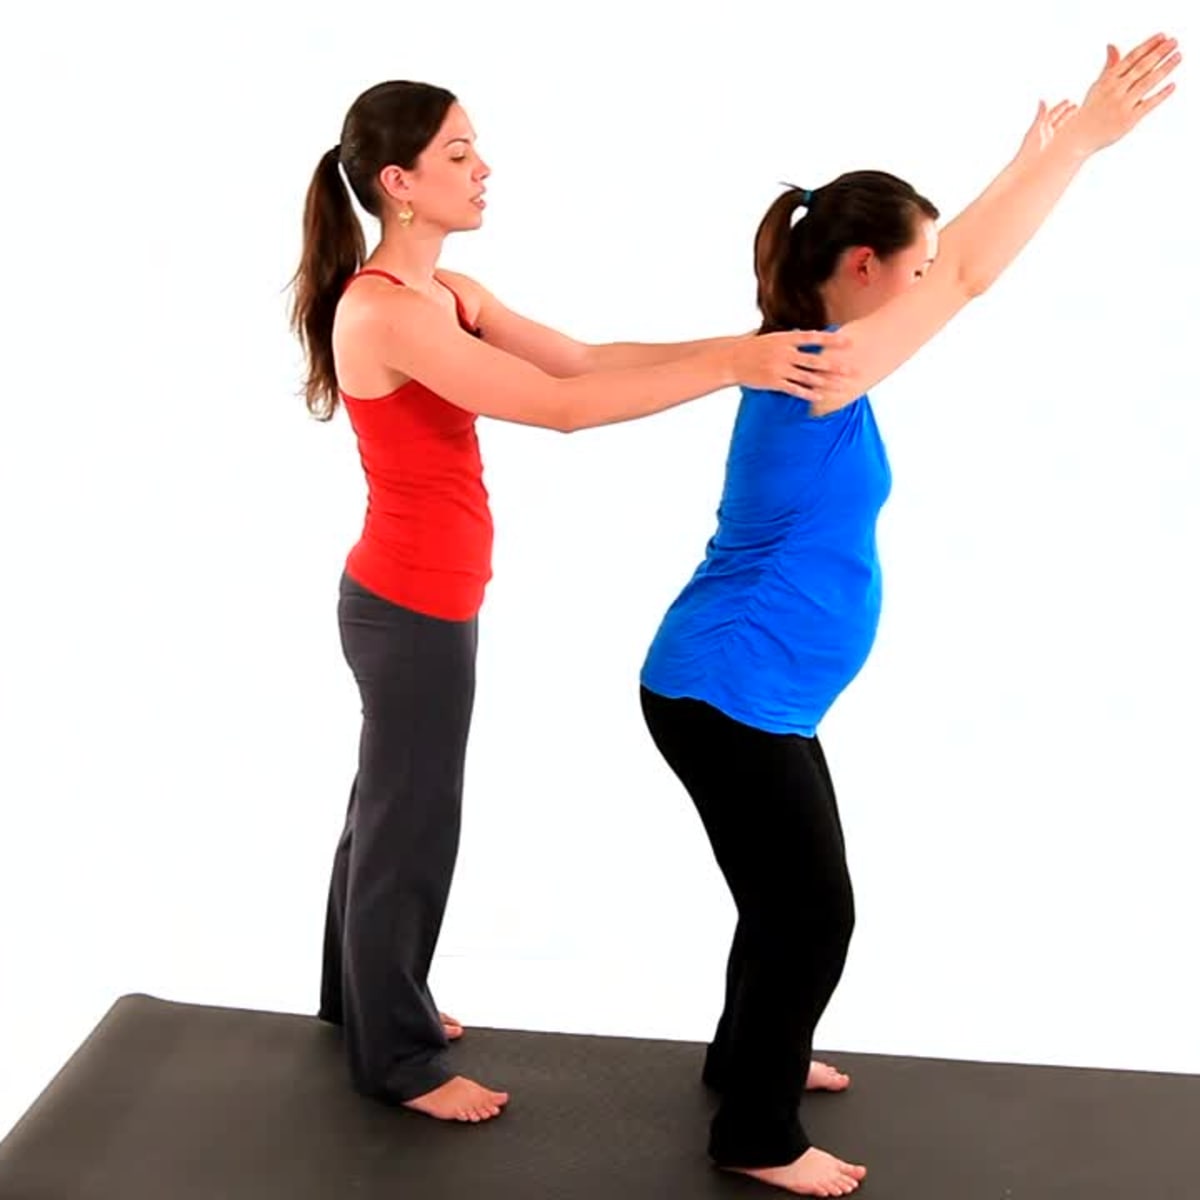 https://www.howcast.com/.image/ar_1:1%2Cc_fill%2Ccs_srgb%2Cfl_progressive%2Cq_auto:good%2Cw_1200/MTU5NzA0NDU5MzQwMDMwOTk2/zd-how-to-do-prenatal-yoga-chair-pose-for-a-pregnancy-workout-promo-image.jpg